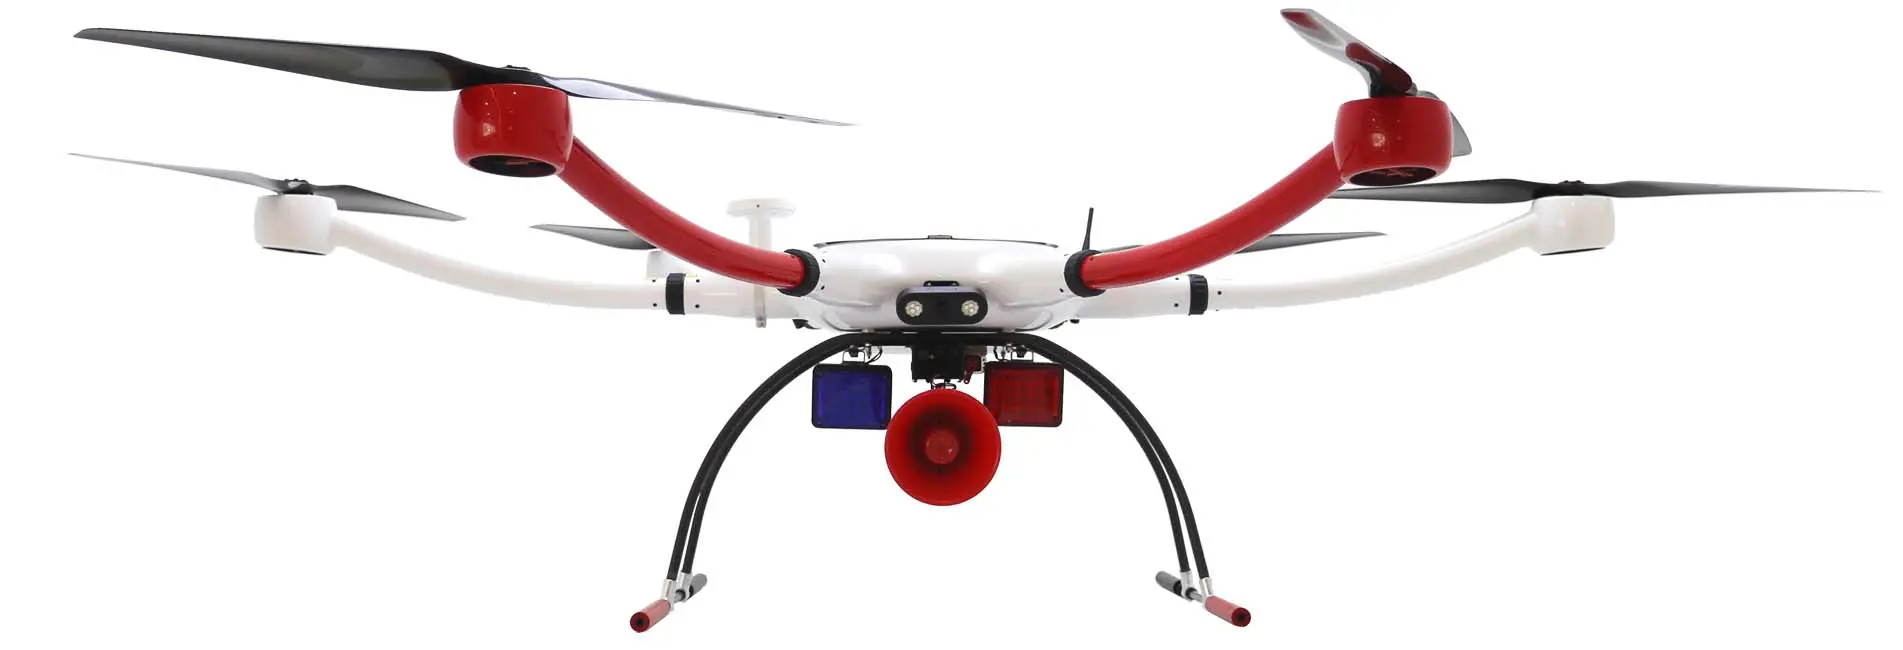 Search and Rescue Drone